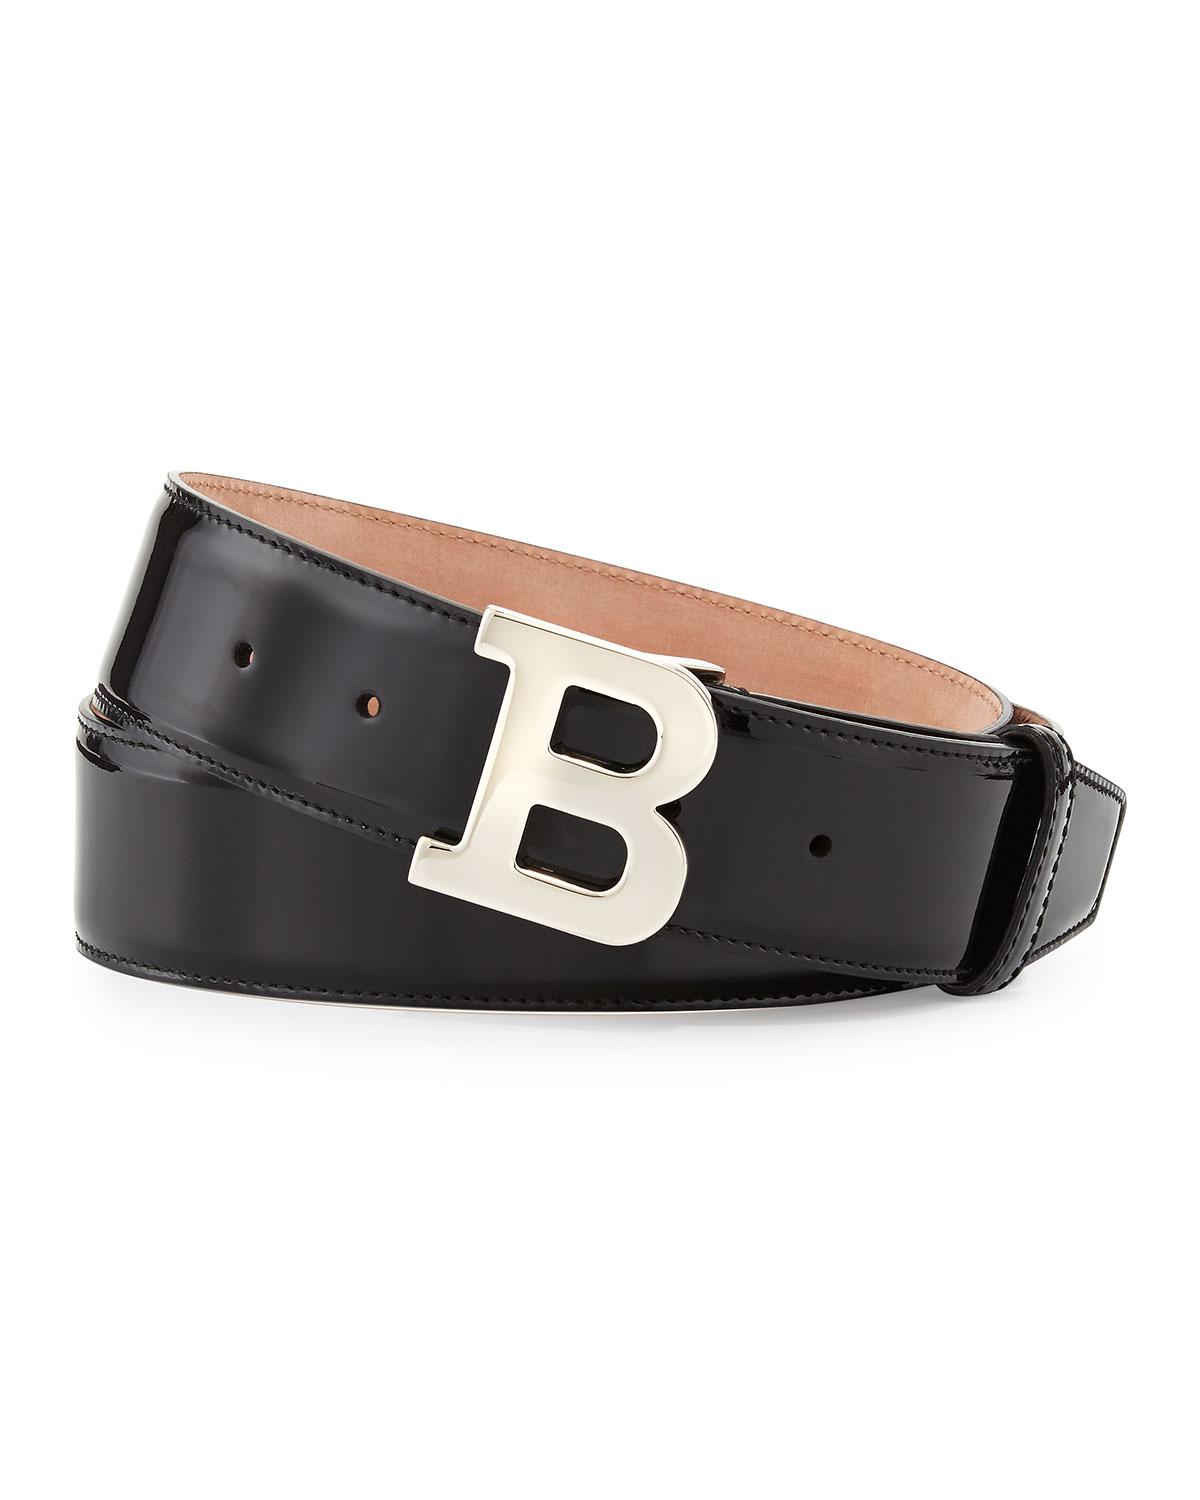 Lyst - Bally Patent B-buckle Belt in Black for Men